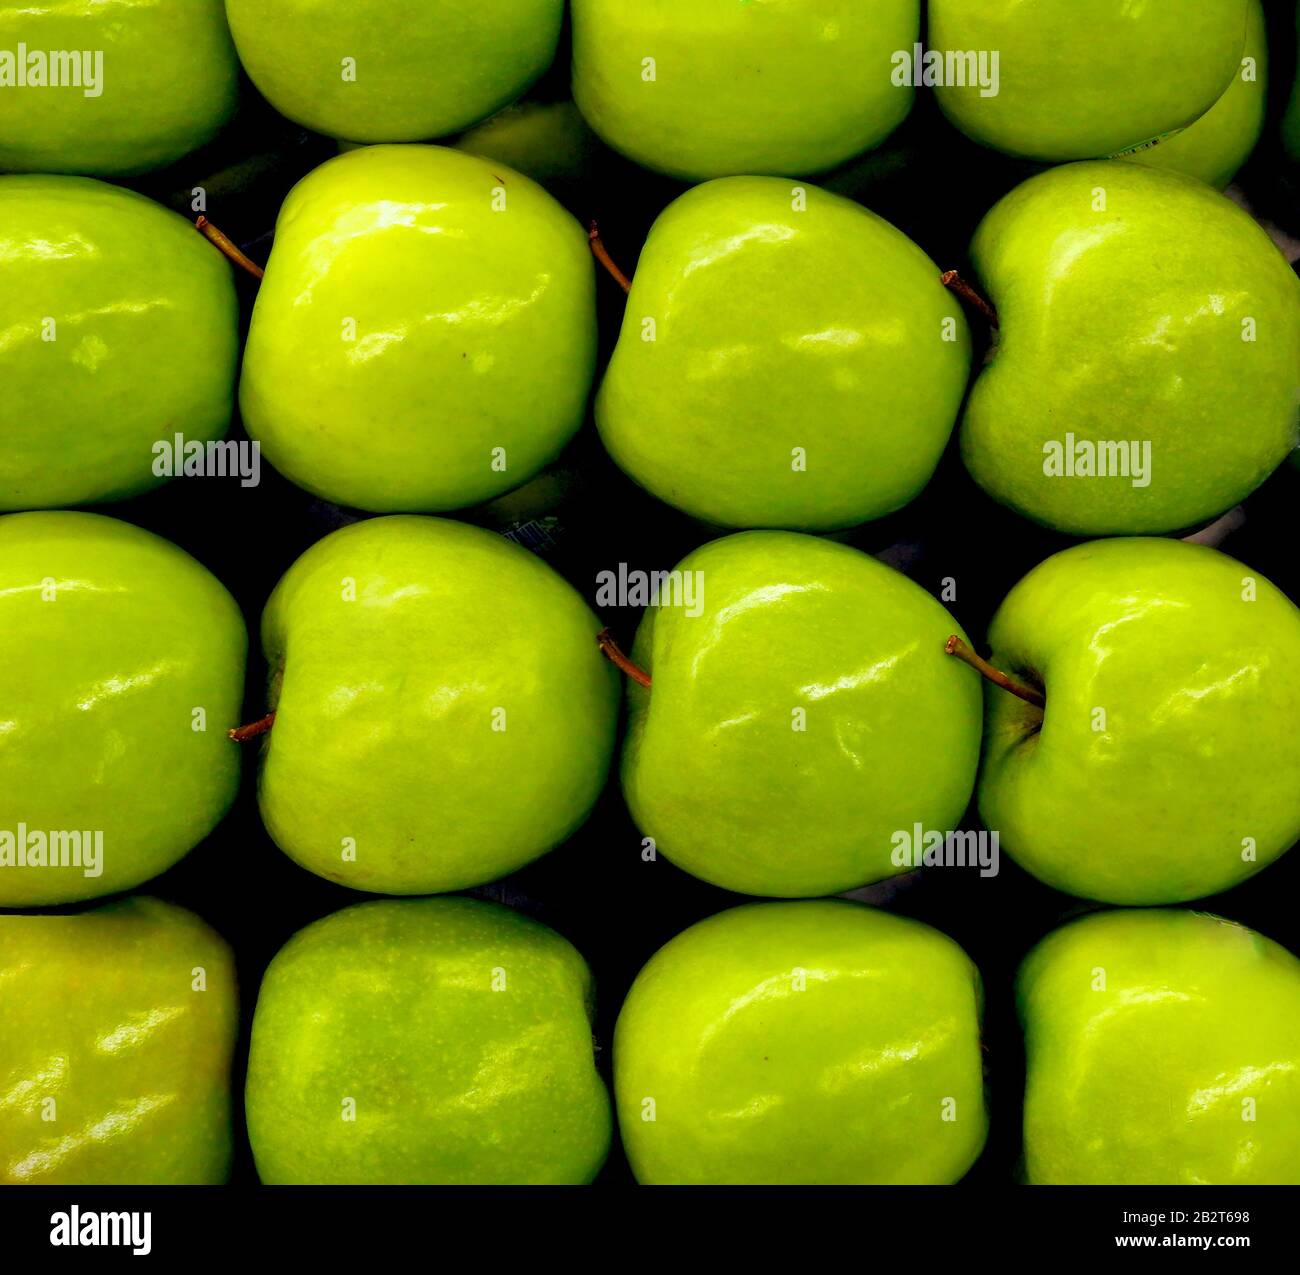 Green Apples - Healthy Choice Stock Photo